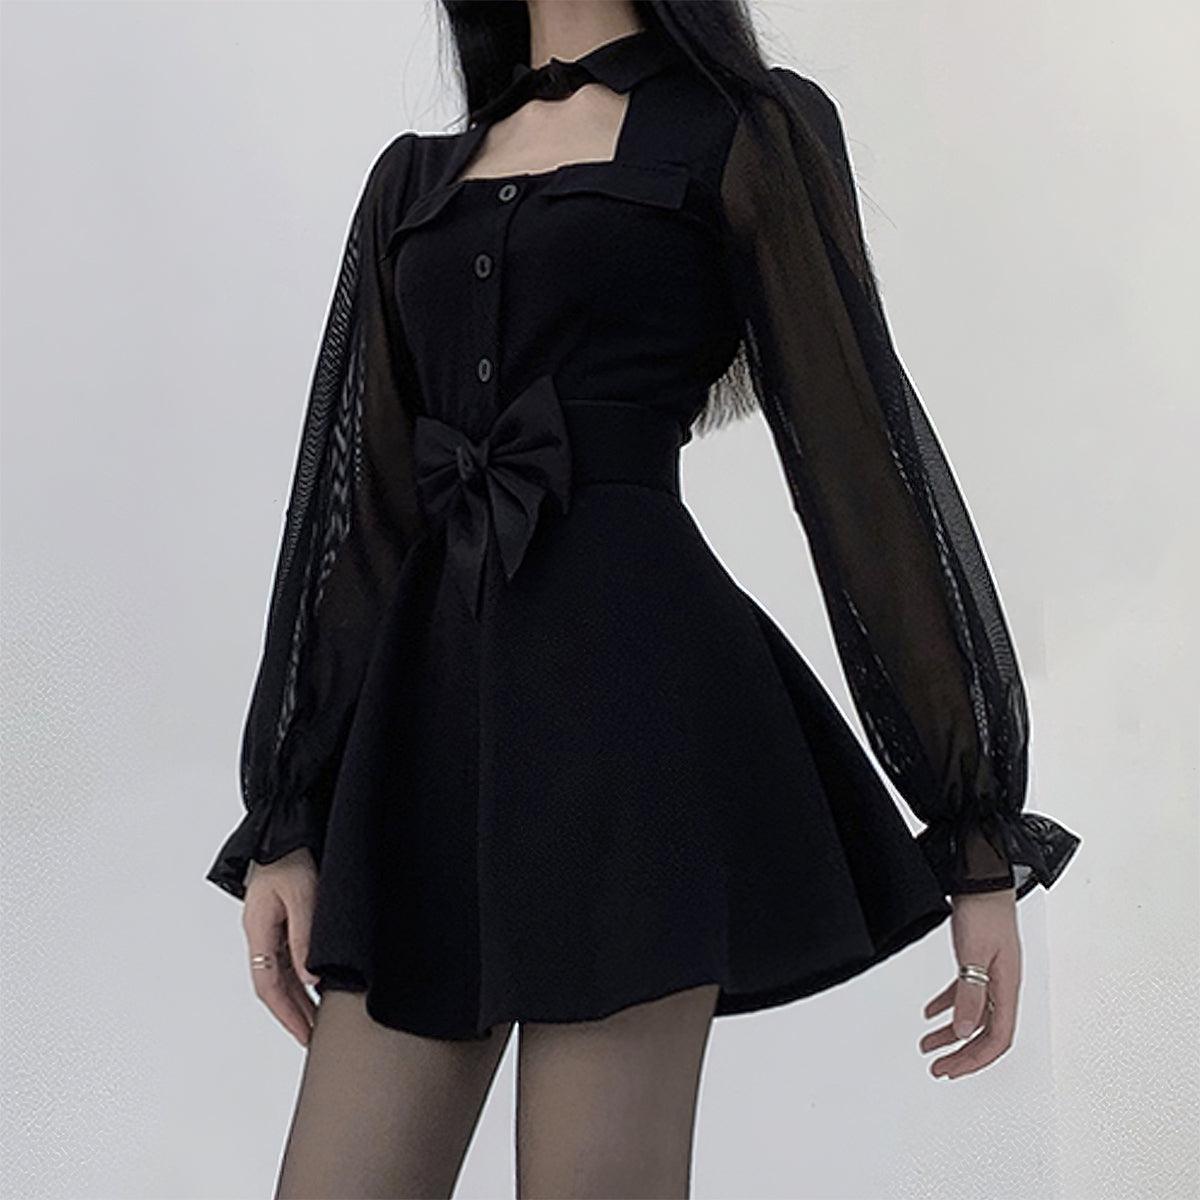 black gothic dress